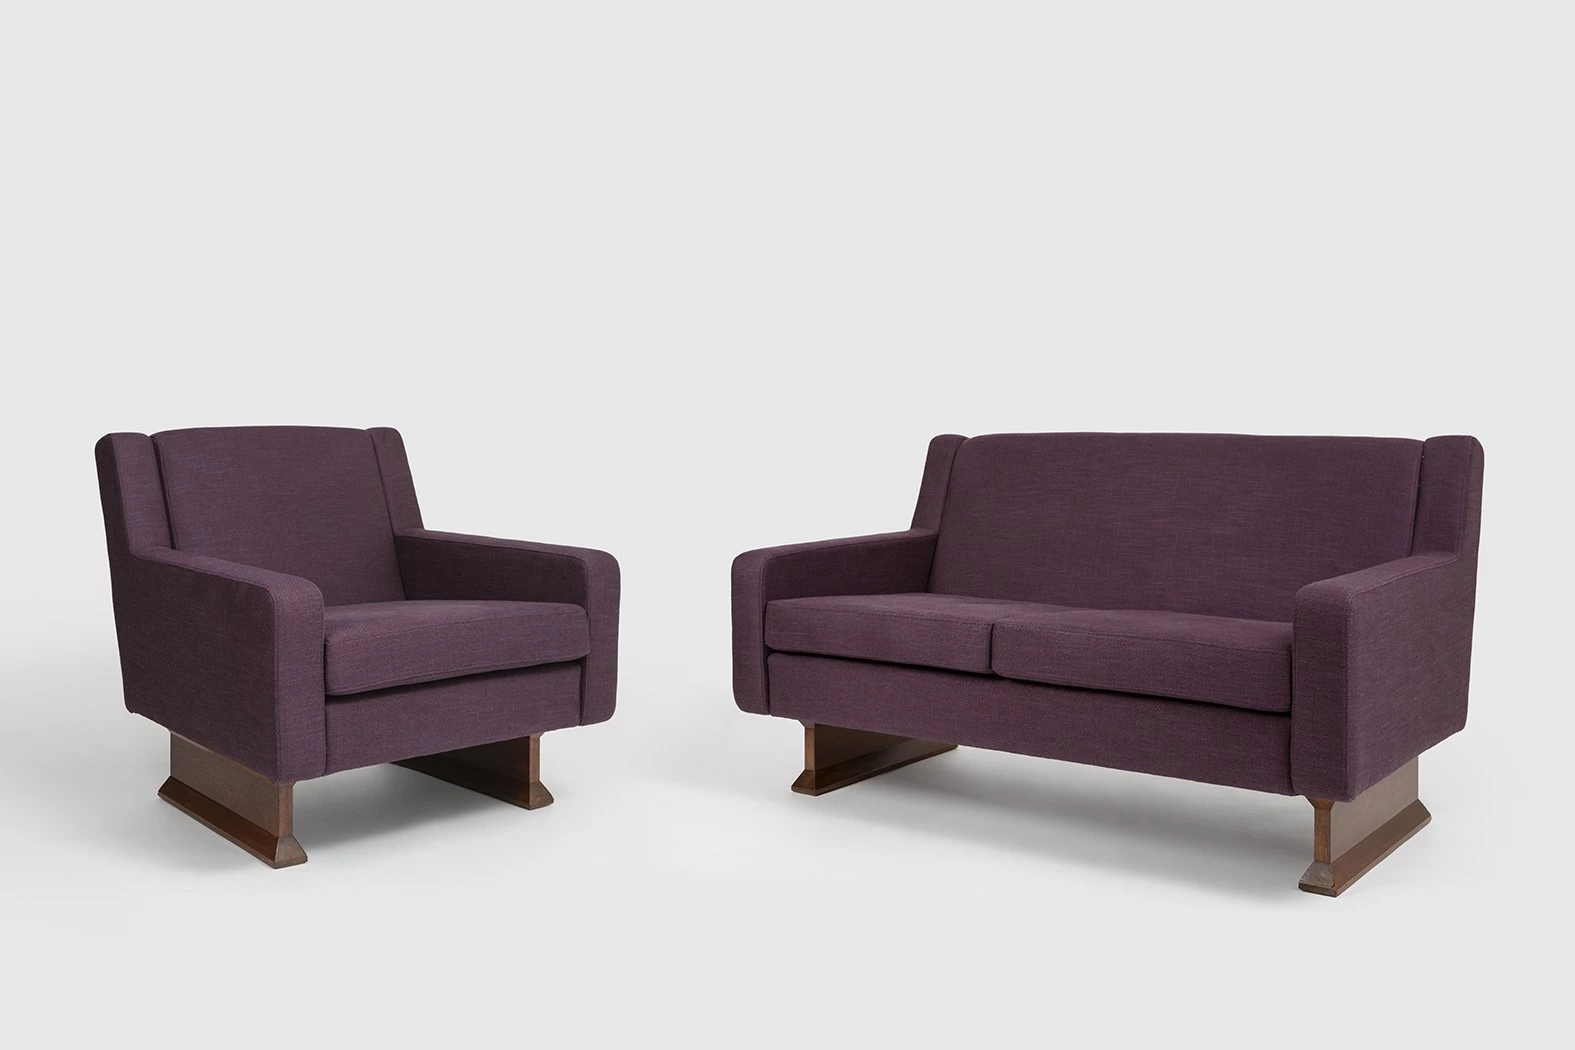 Divano DV33 (Small) (purple) - Franco Albini - Seating - Galerie kreo